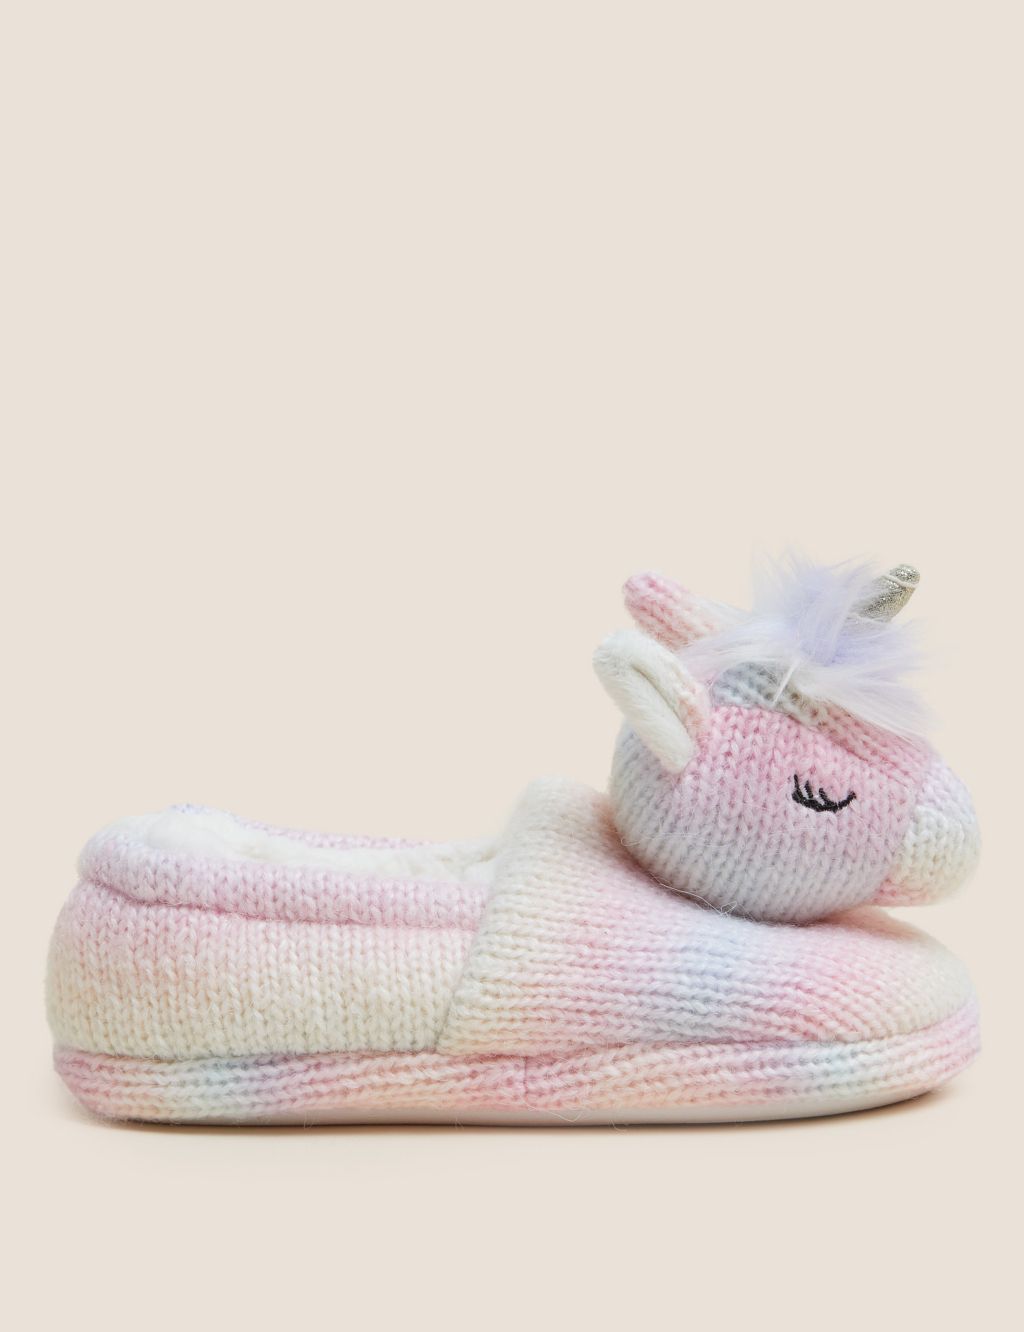 Kids' Unicorn Slippers (4 Small - 6 Large) image 1